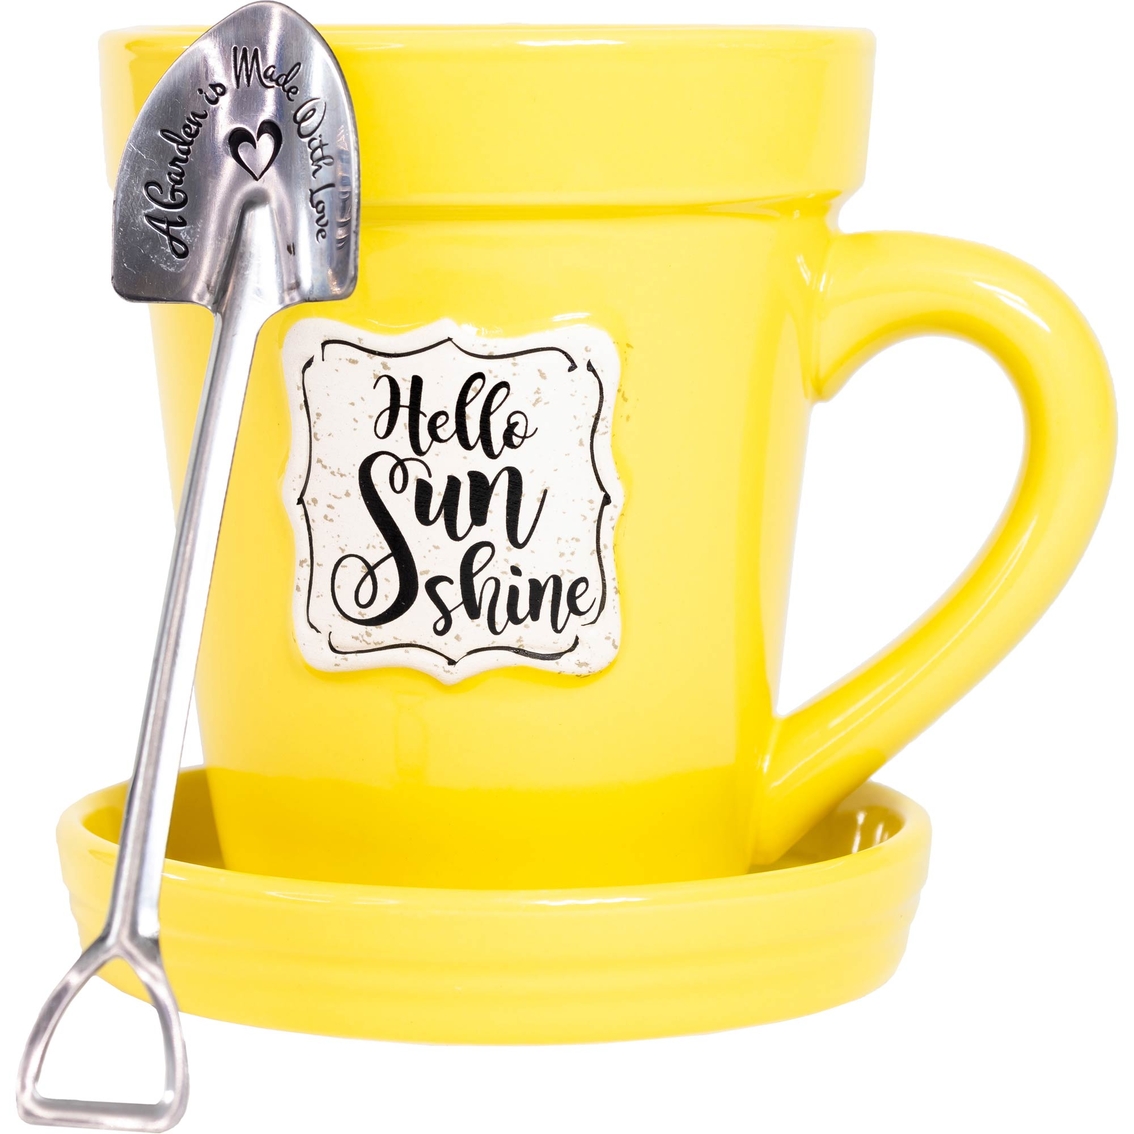 Flower Pot Mug Hello Sunshine Gift Set - Image 2 of 2